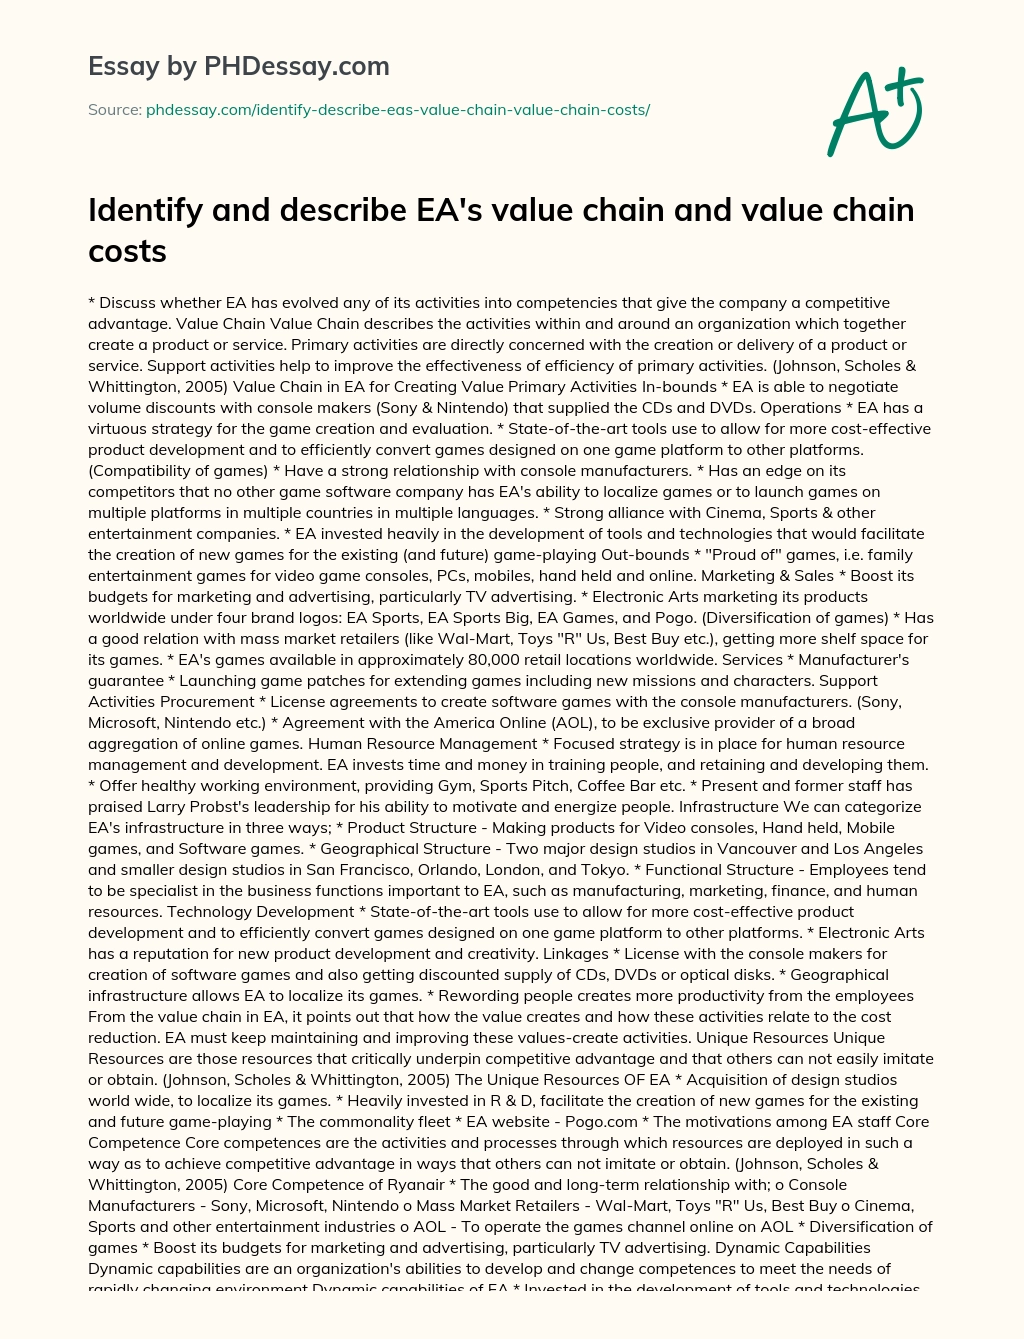 Identify and describe EA’s value chain and value chain costs essay